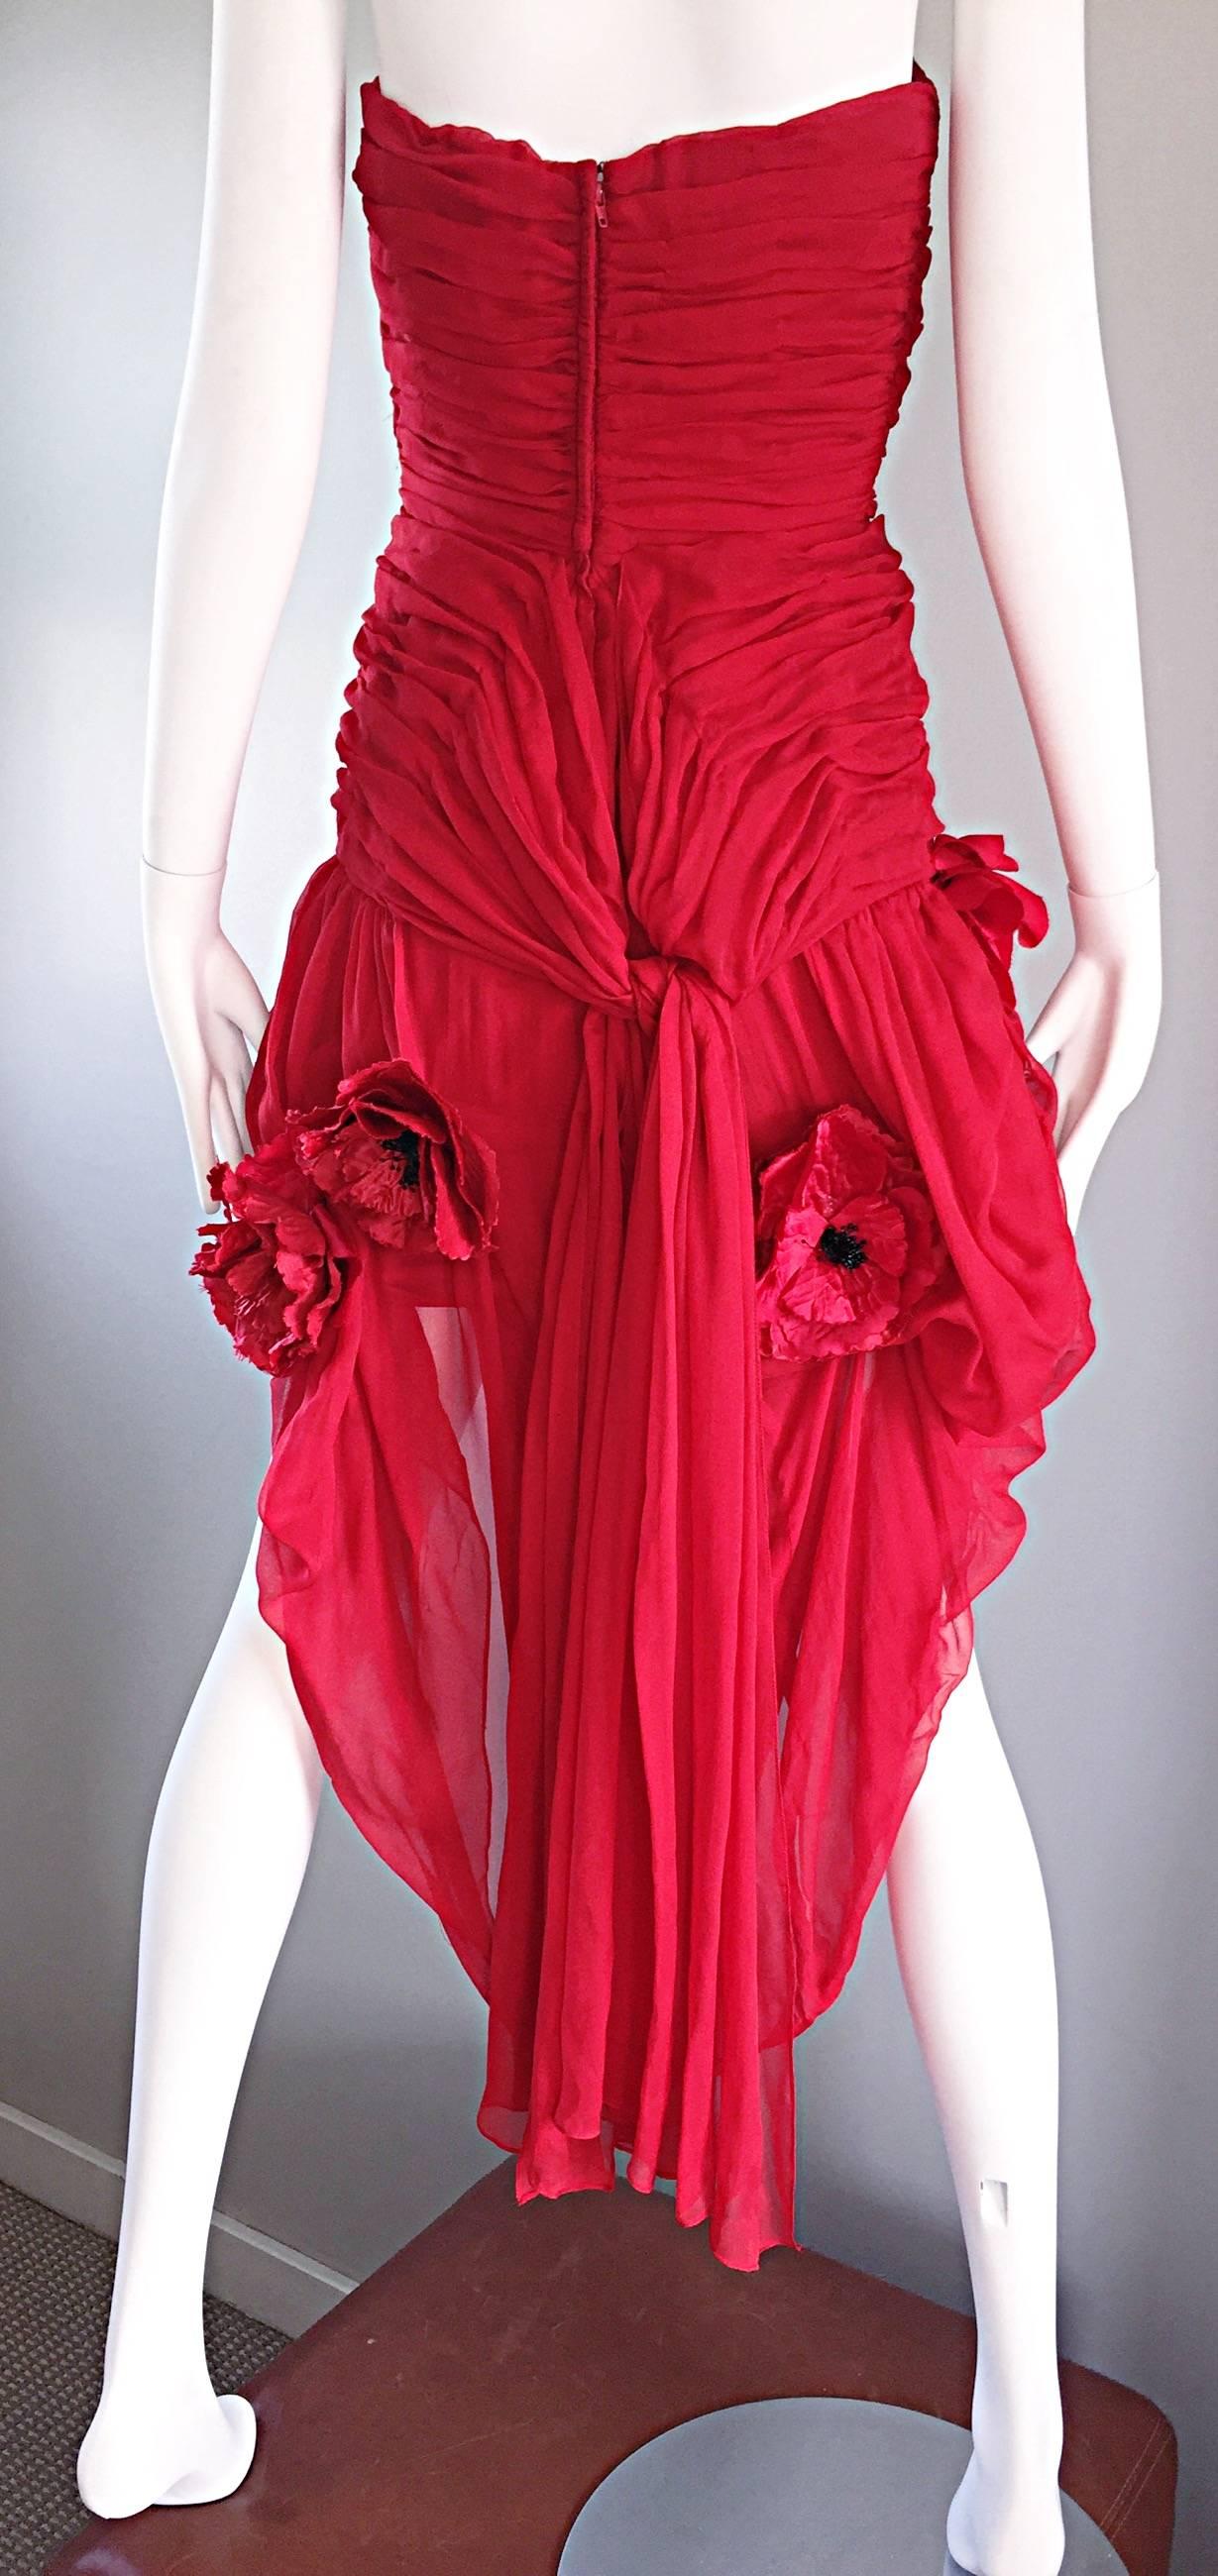 Vintage Christian Lacroix Lipstick Red Chiffon Strapless High - Lo Poppy Dress 1